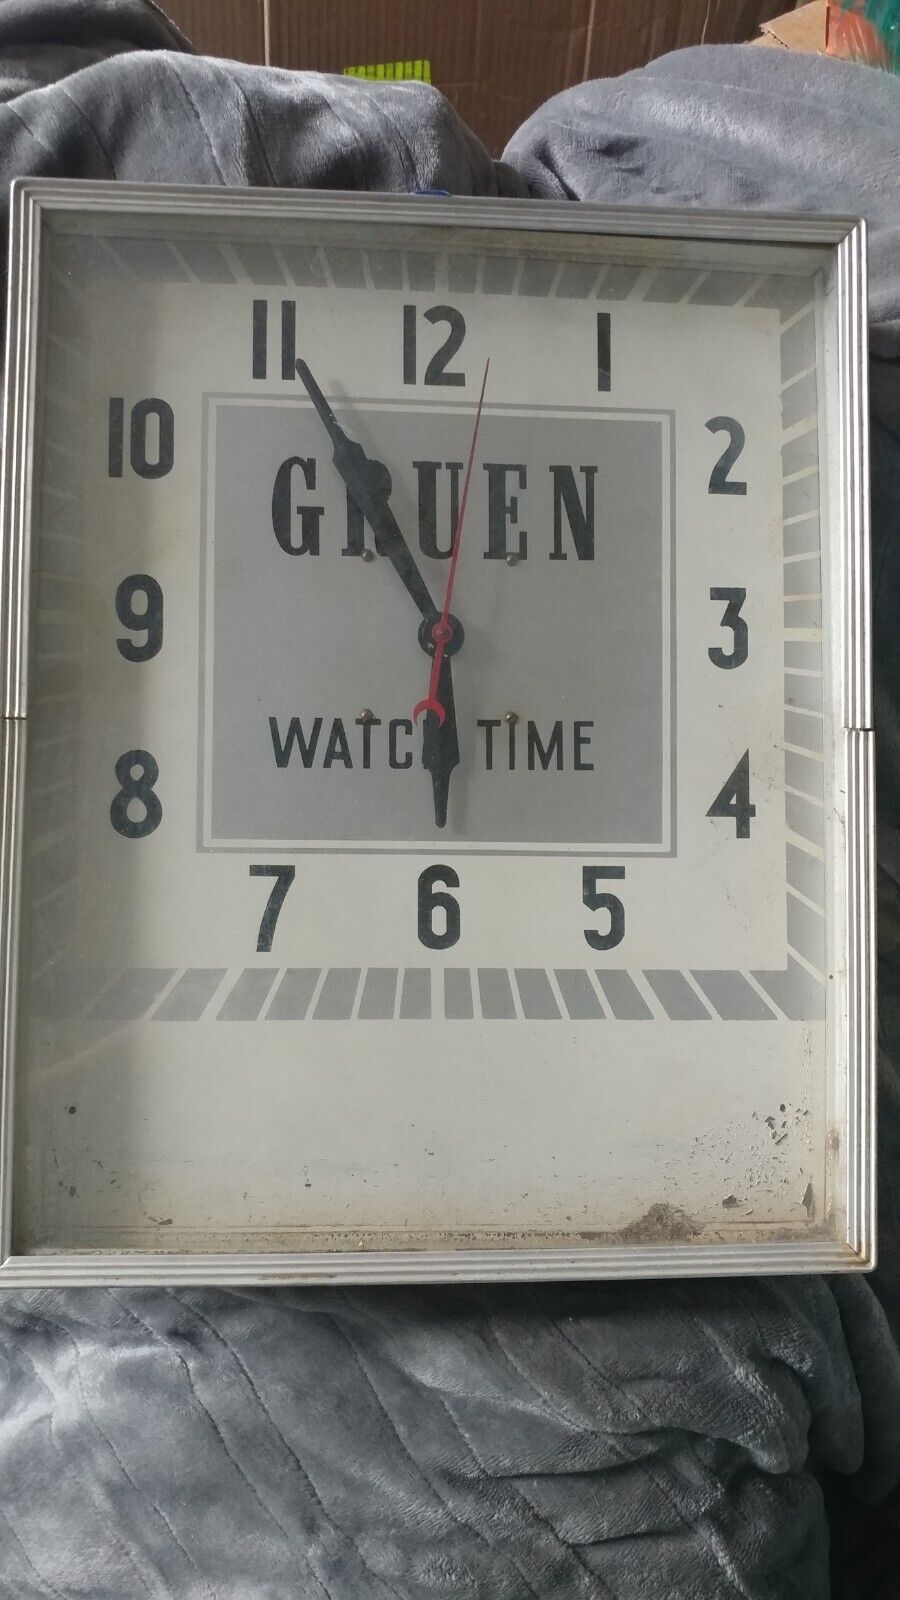 Vintage Rare GRUEN Watch Time Wall Advertising Clock for Restoration